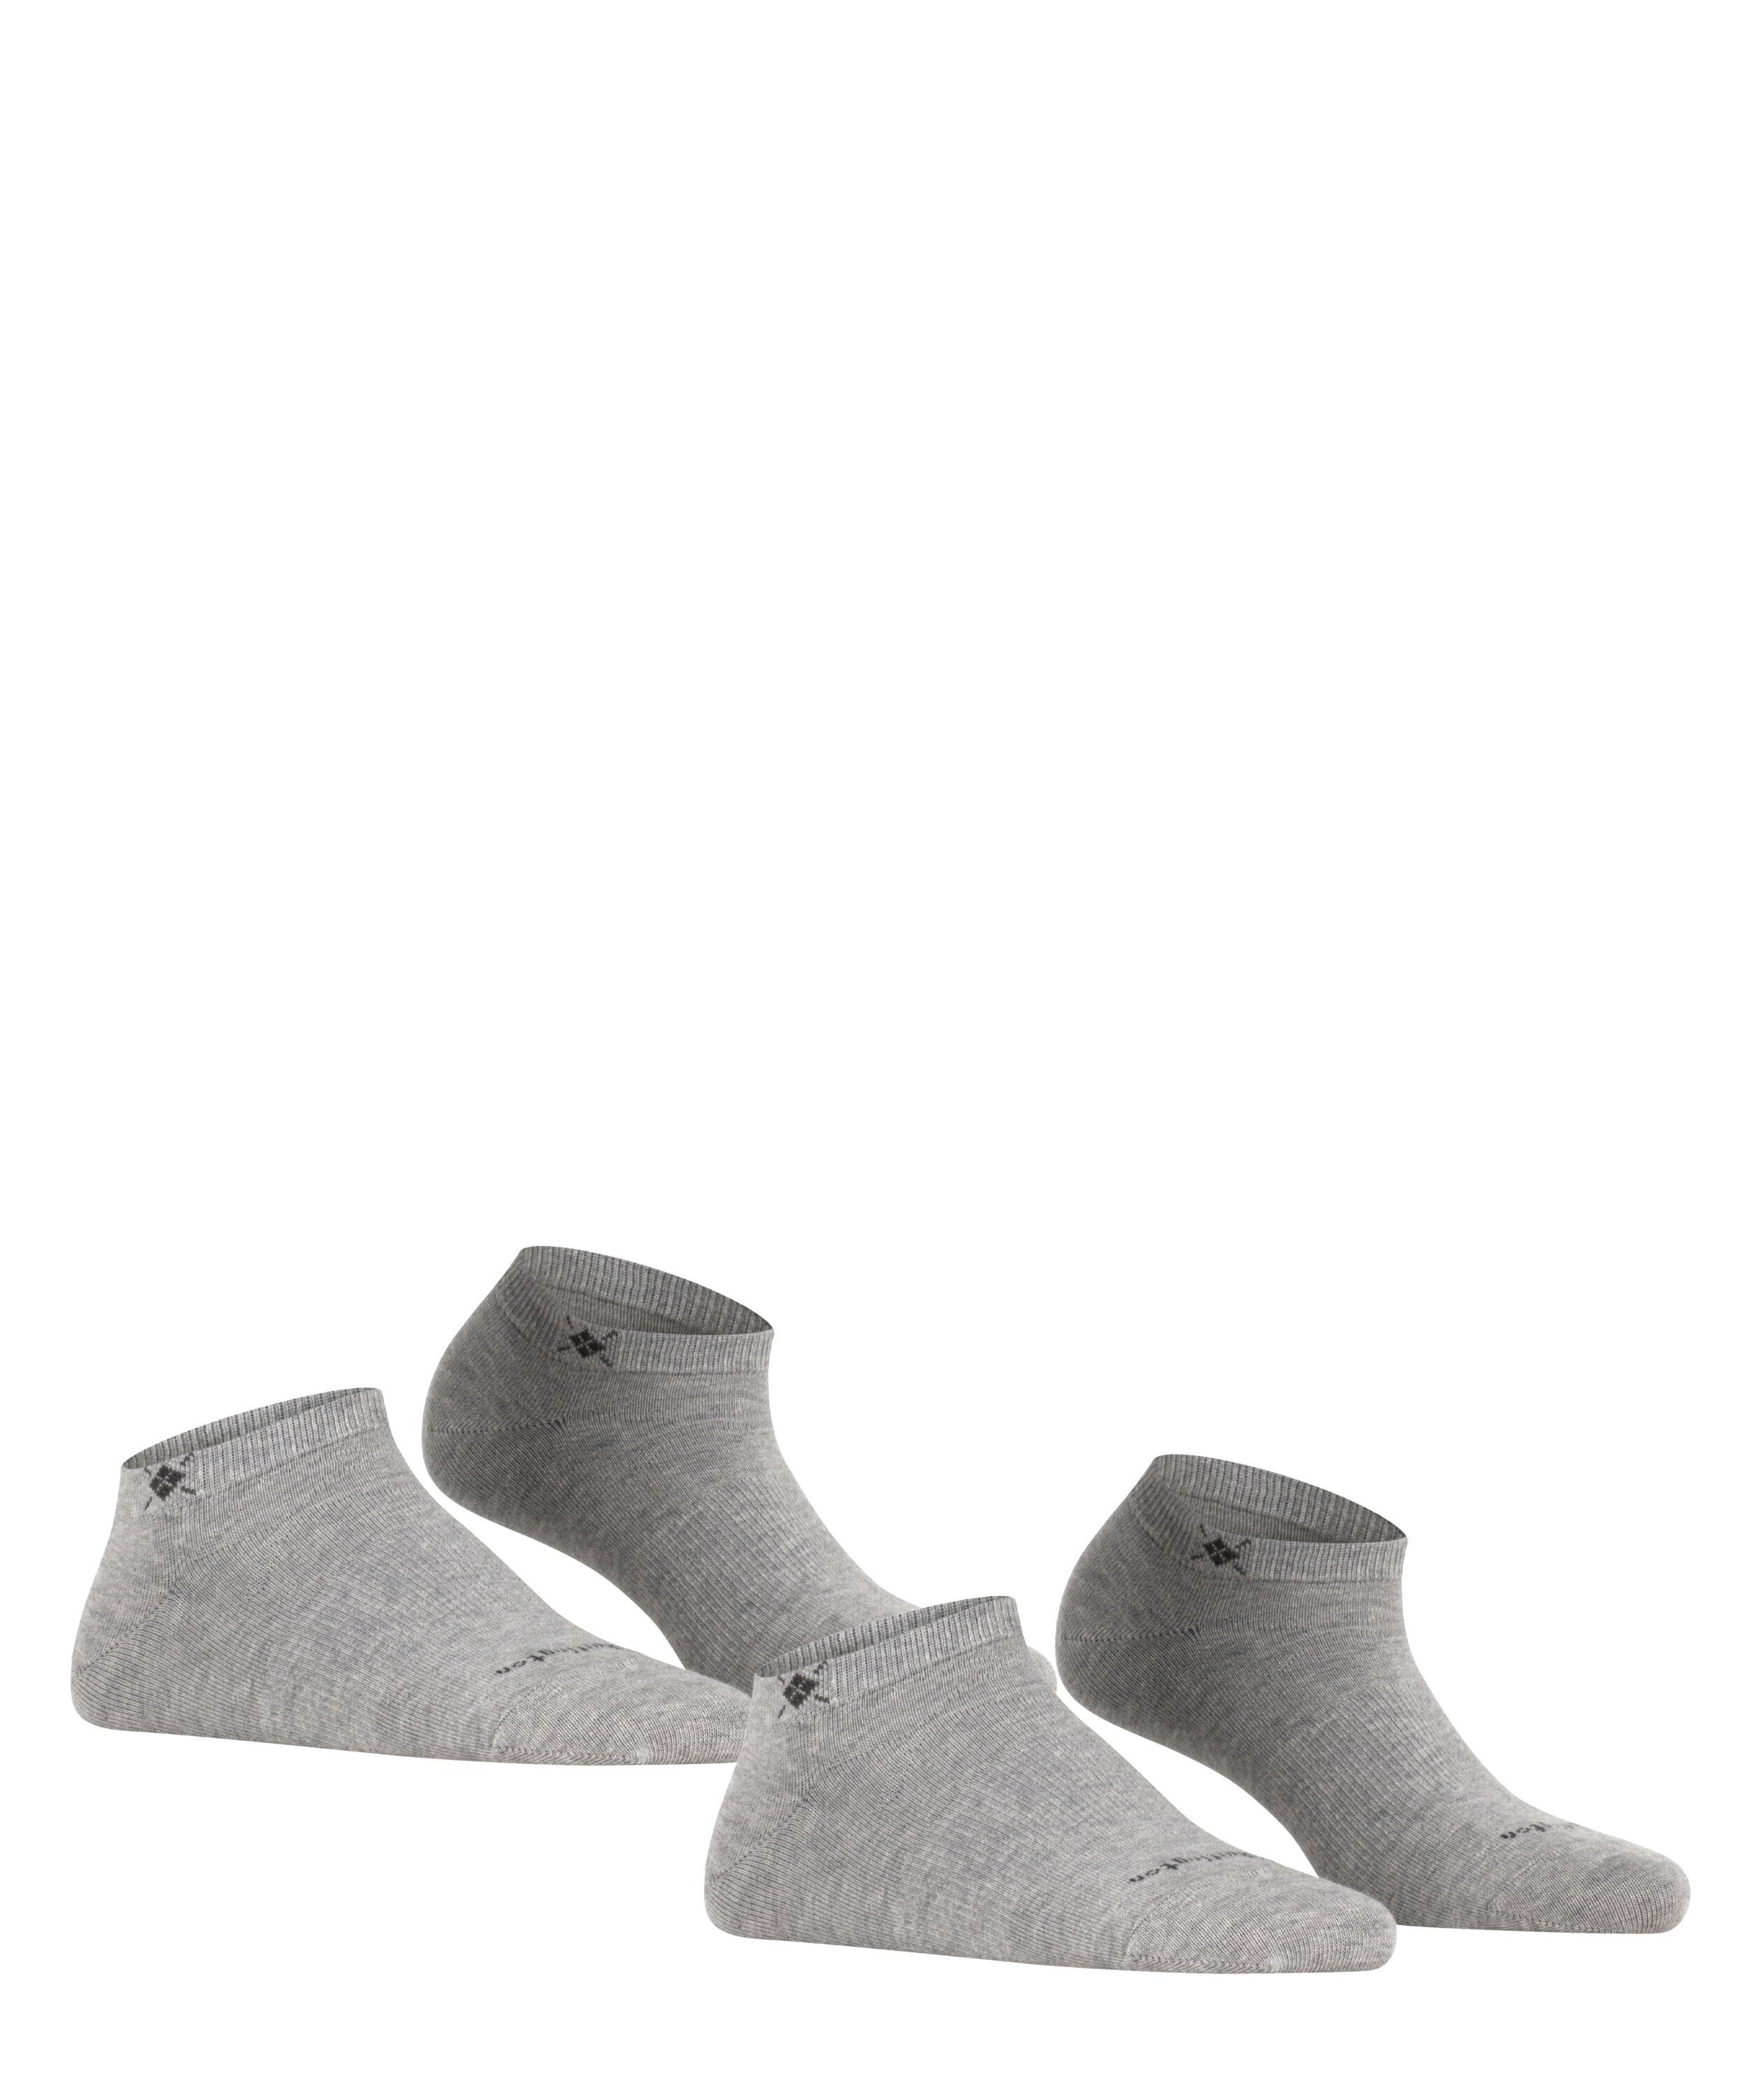 Burlington gekämmter light aus Everyday (3400) (2-Paar) weicher Sneakersocken Baumwolle grey 2-Pack